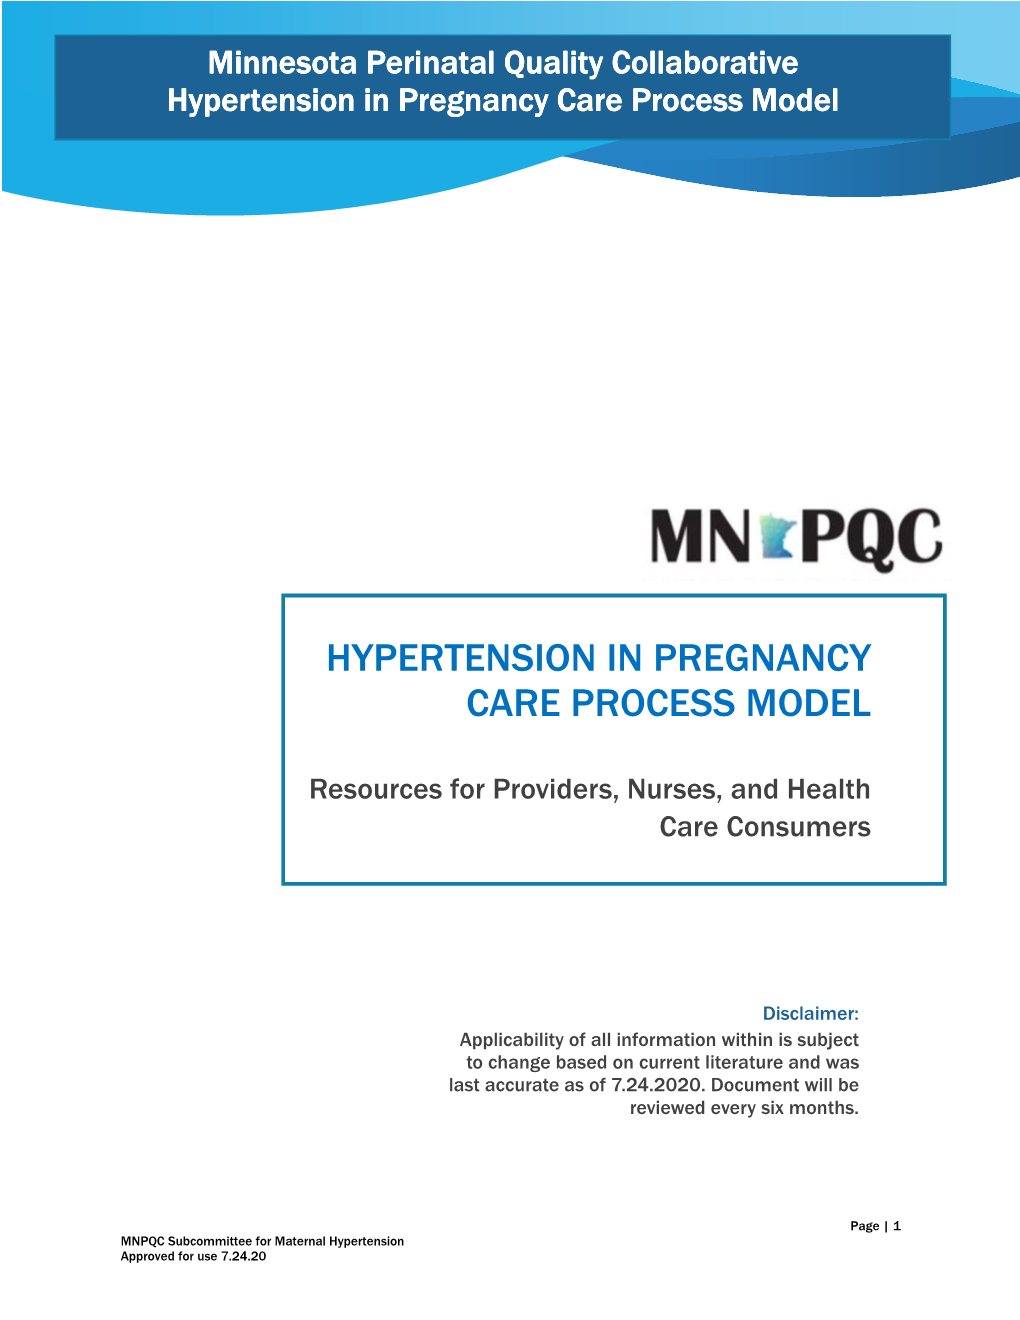 Hypertension in Pregnancy Care Process Model